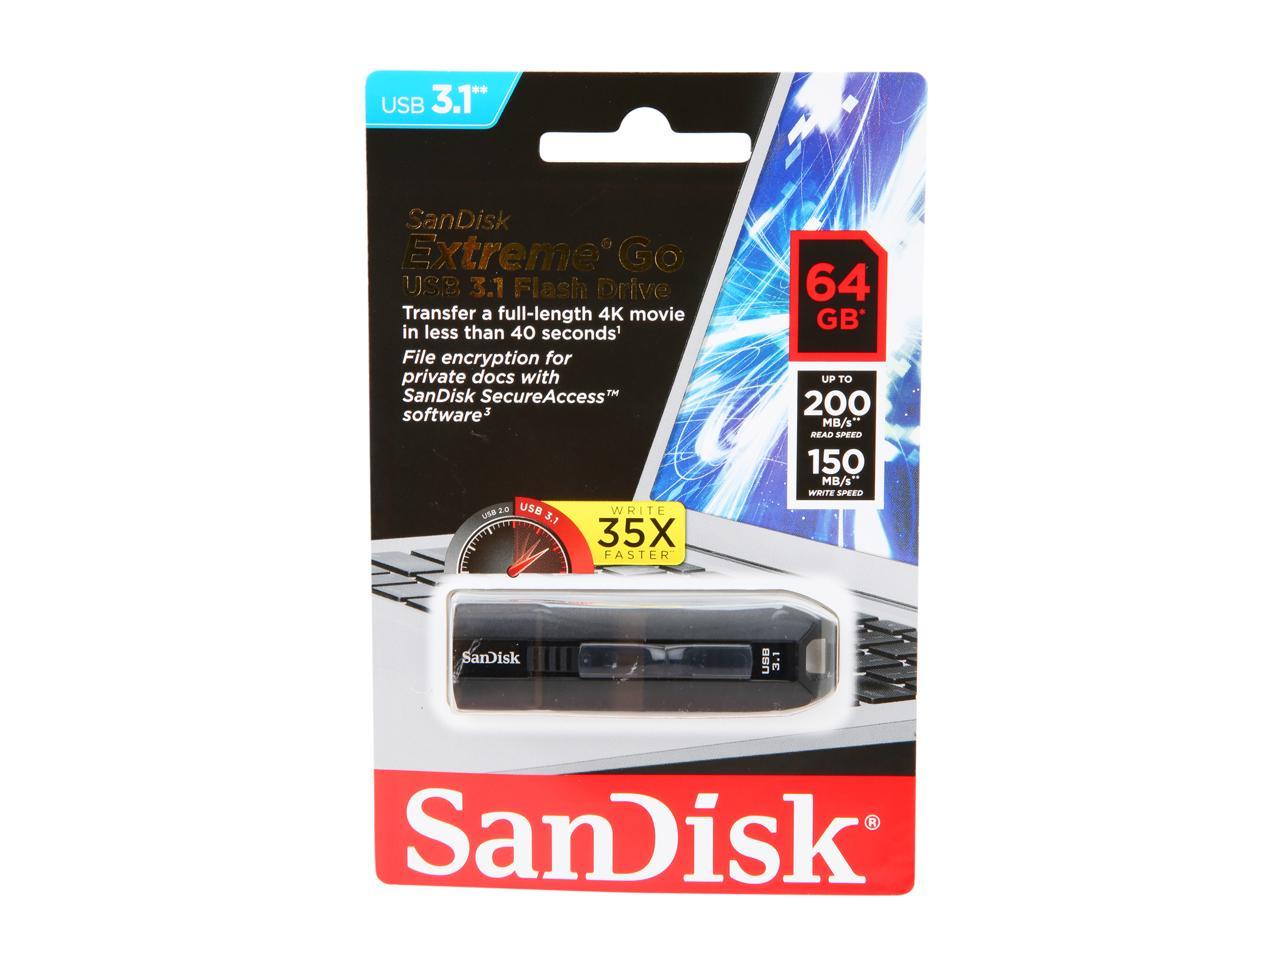 SanDisk Extreme® Go USB Drive